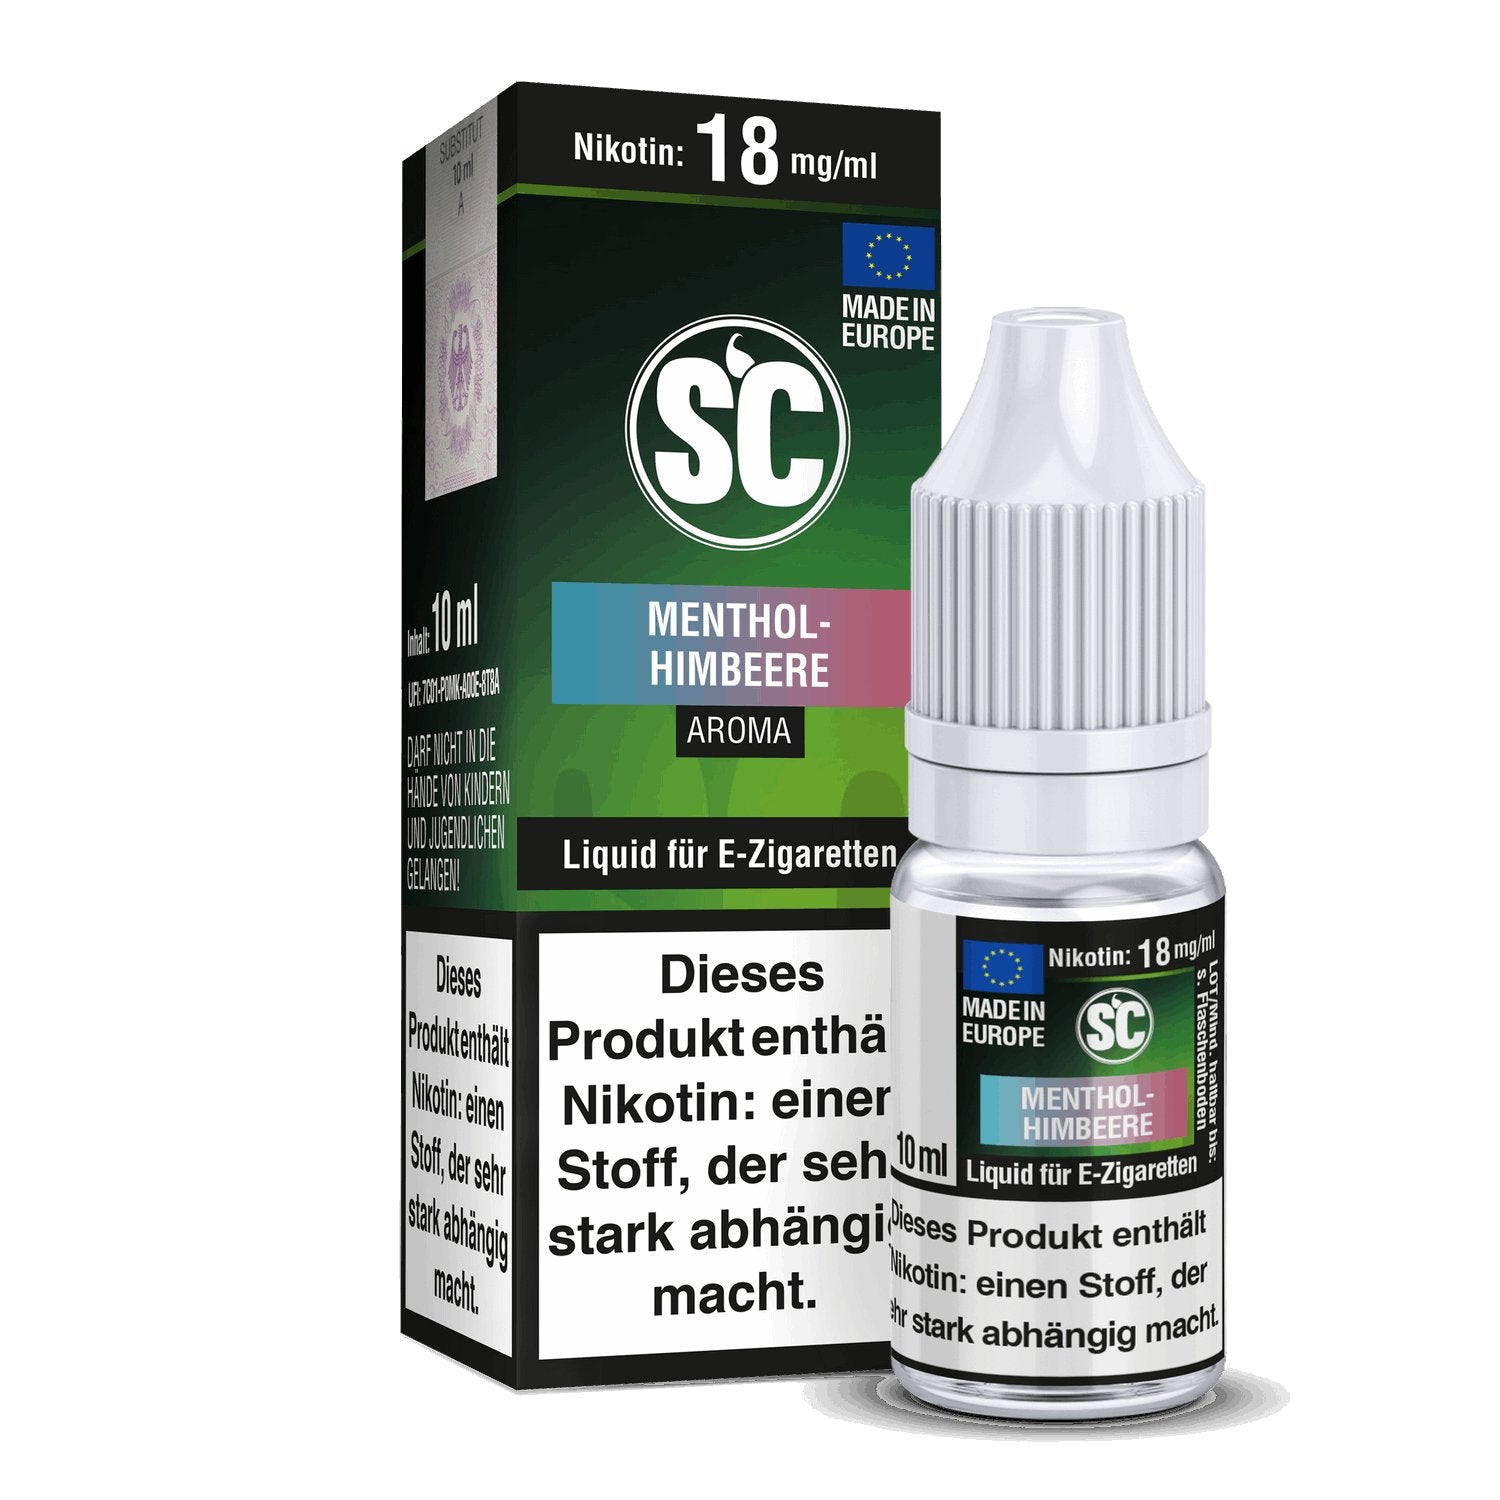 SC - Menthol-Himbeere - 10ml Fertigliquid (Nikotinfrei/Nikotin) - 1er Packung 18 mg/ml - Vapes4you